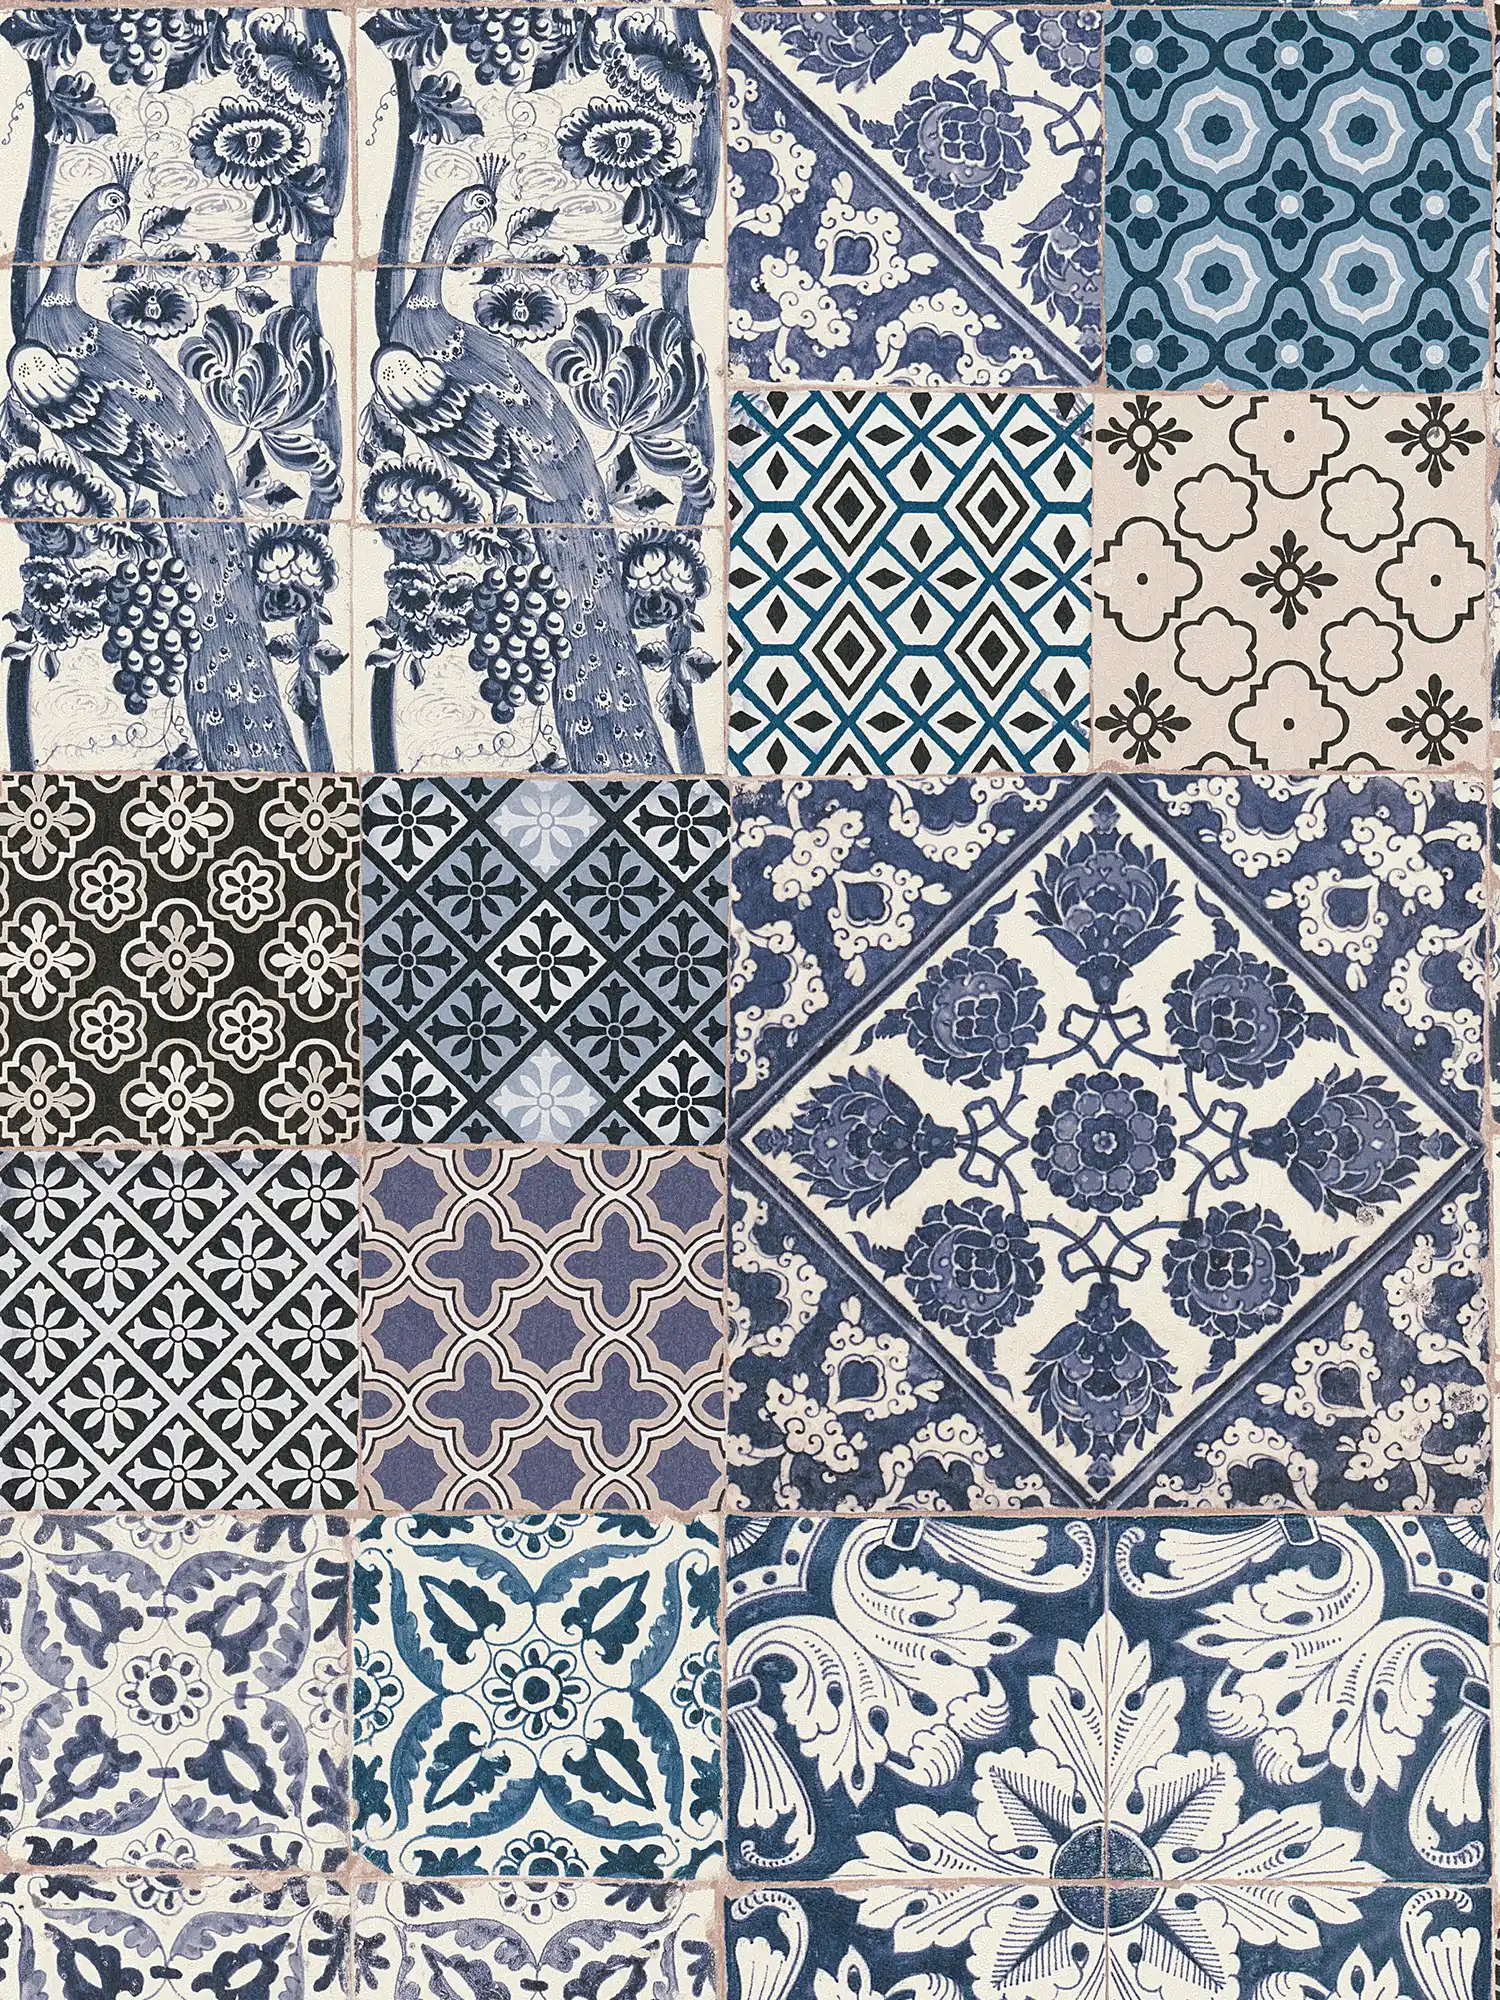             Tegels en mozaïek design behang - blauw, crème, wit
        